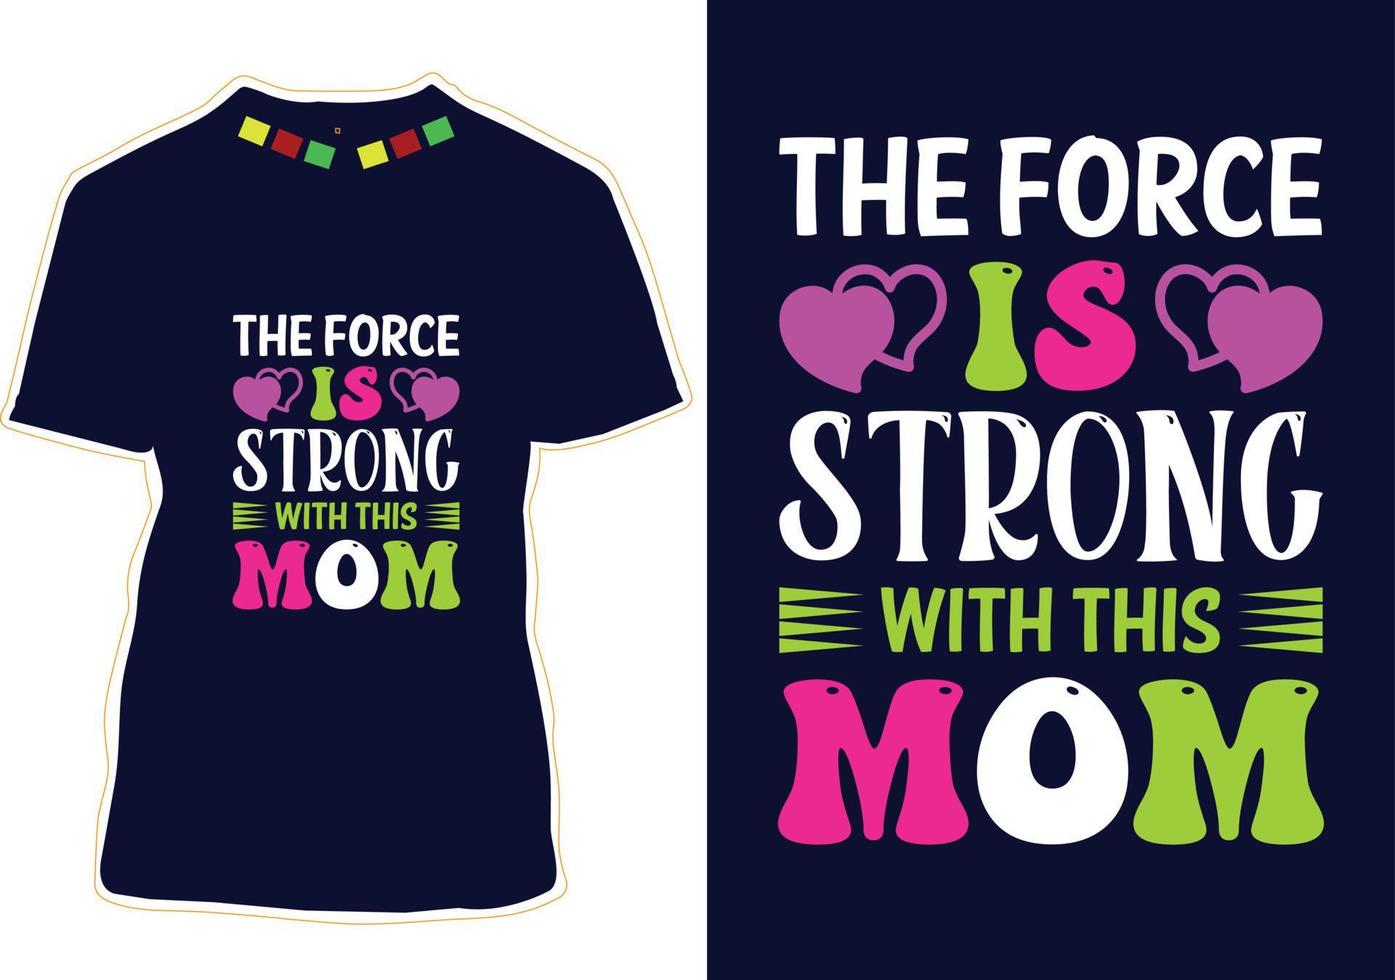 design de camiseta feliz dia das mães vetor